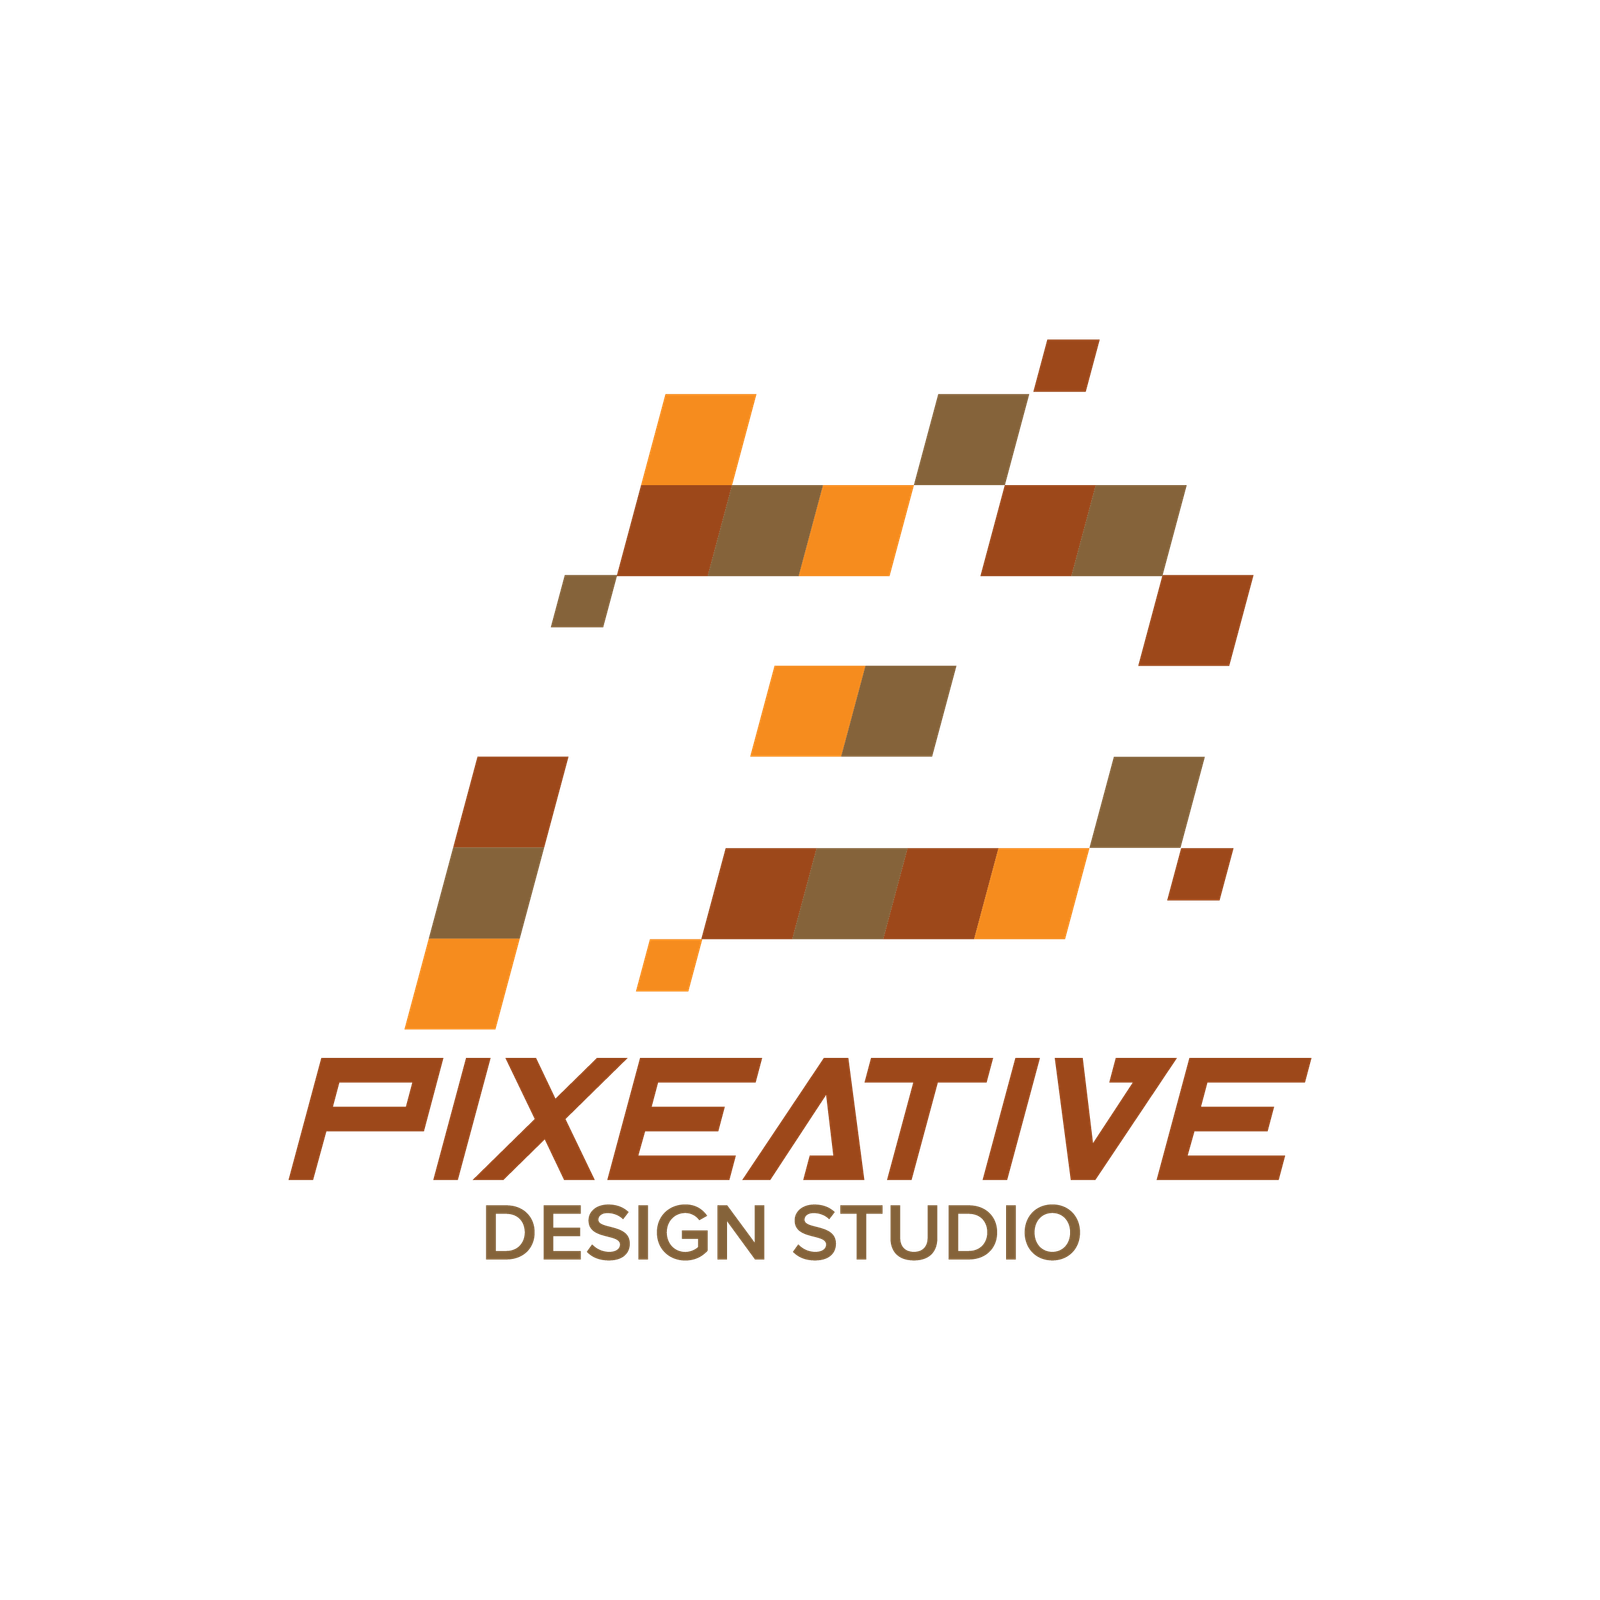 Pixeative Design Studio